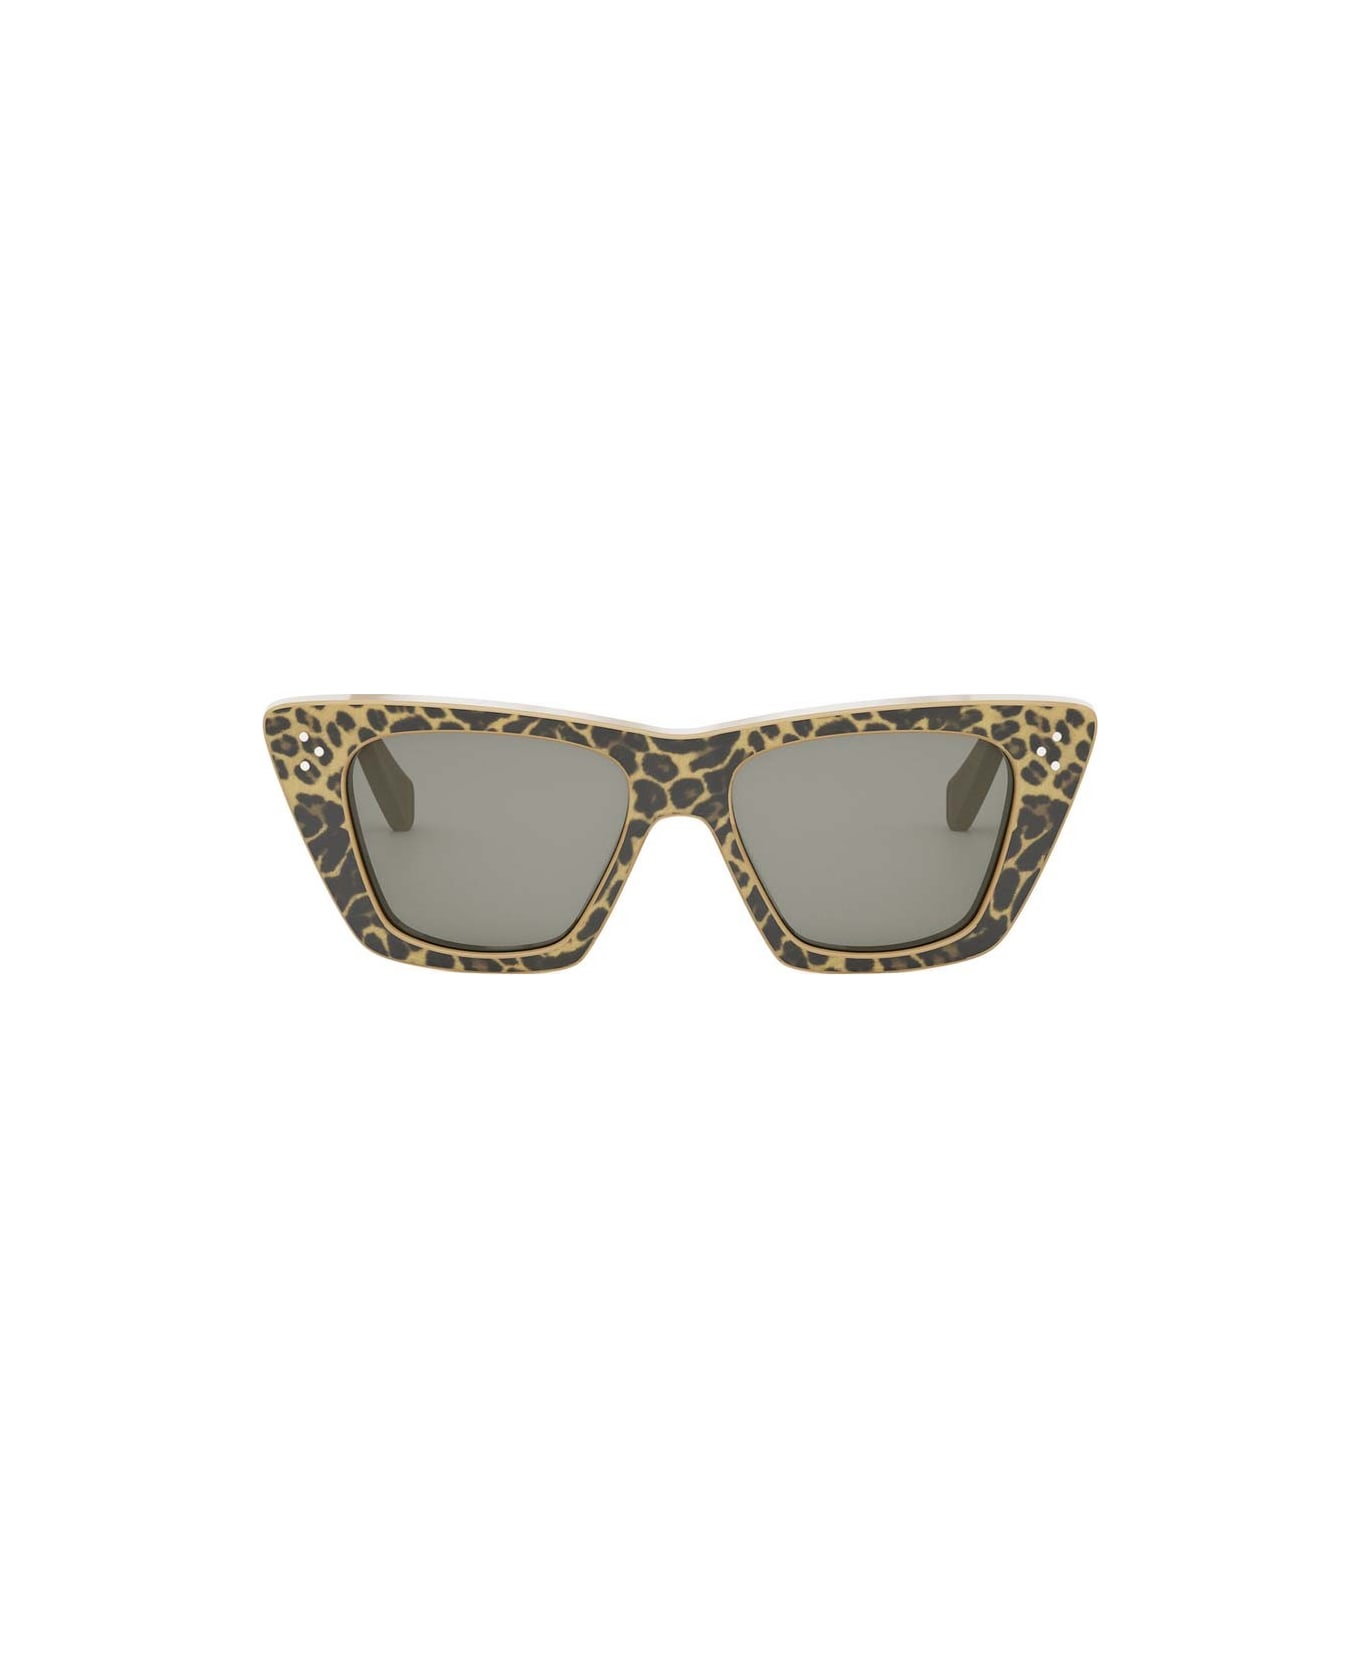 Celine Sunglasses - Leopardato/Oro/Grigio サングラス